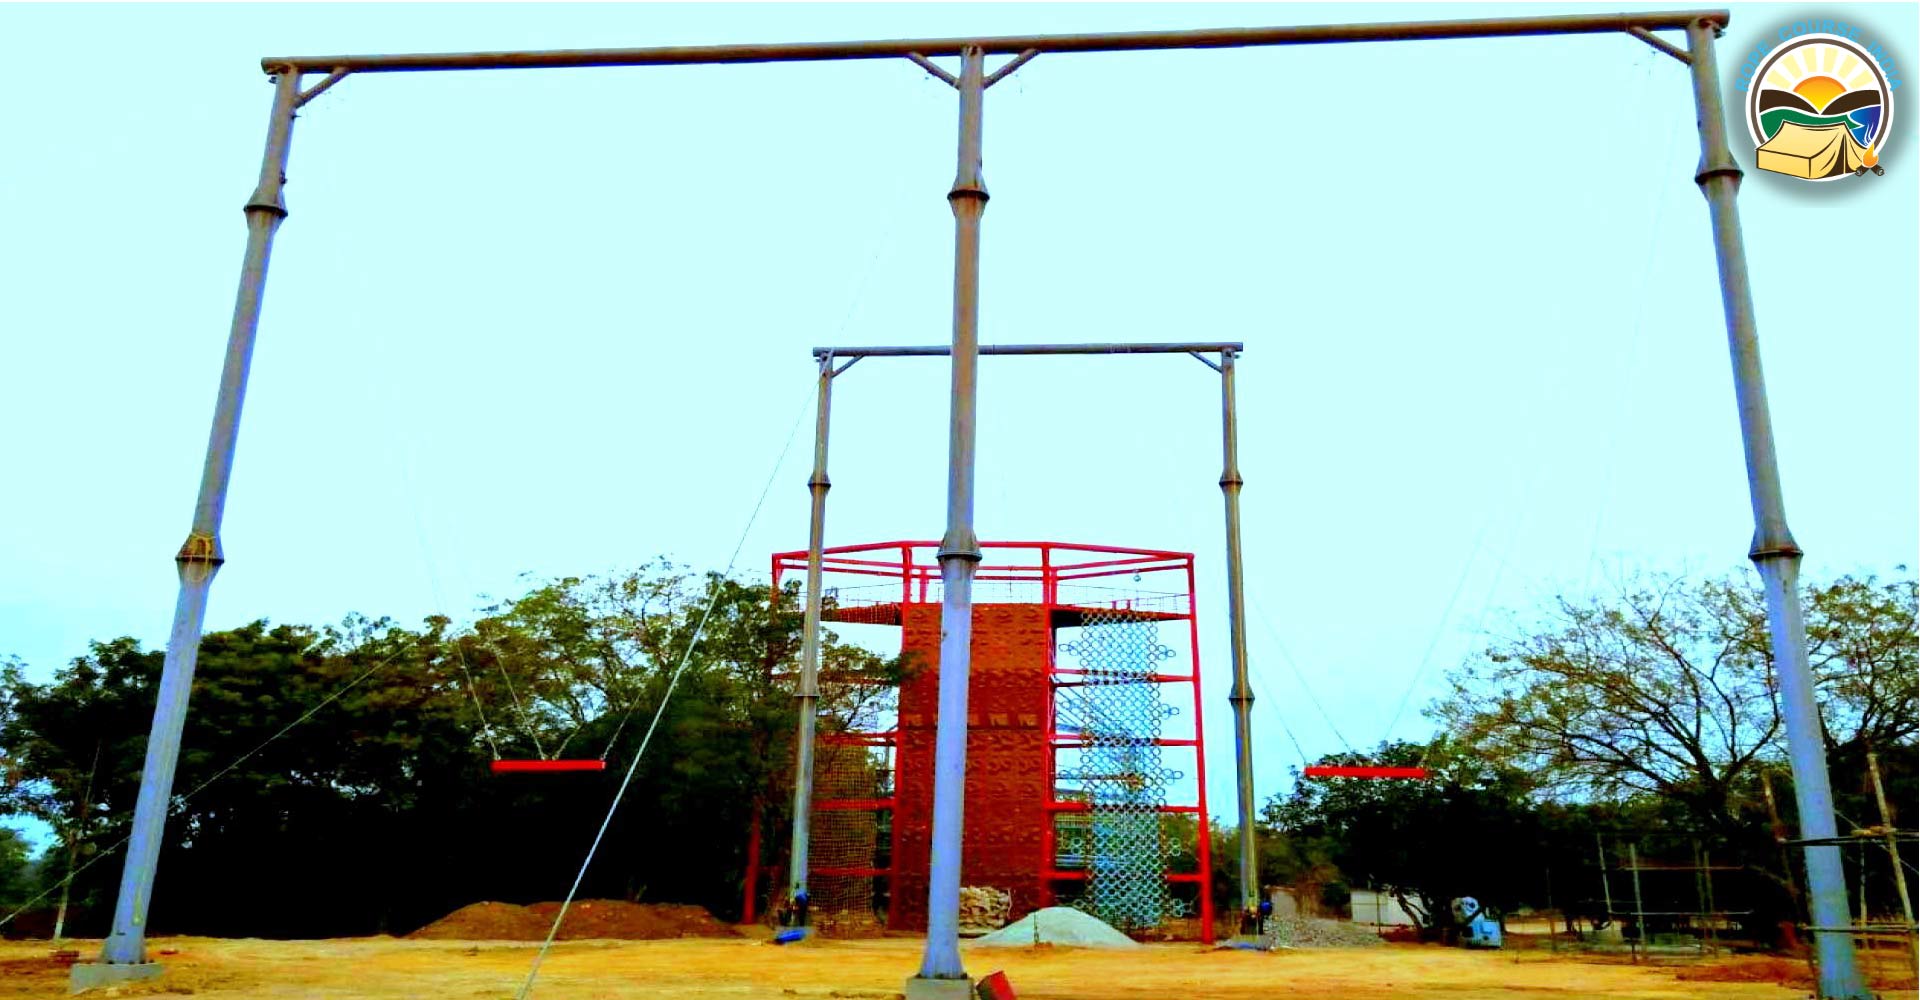 Giant swing setup in india